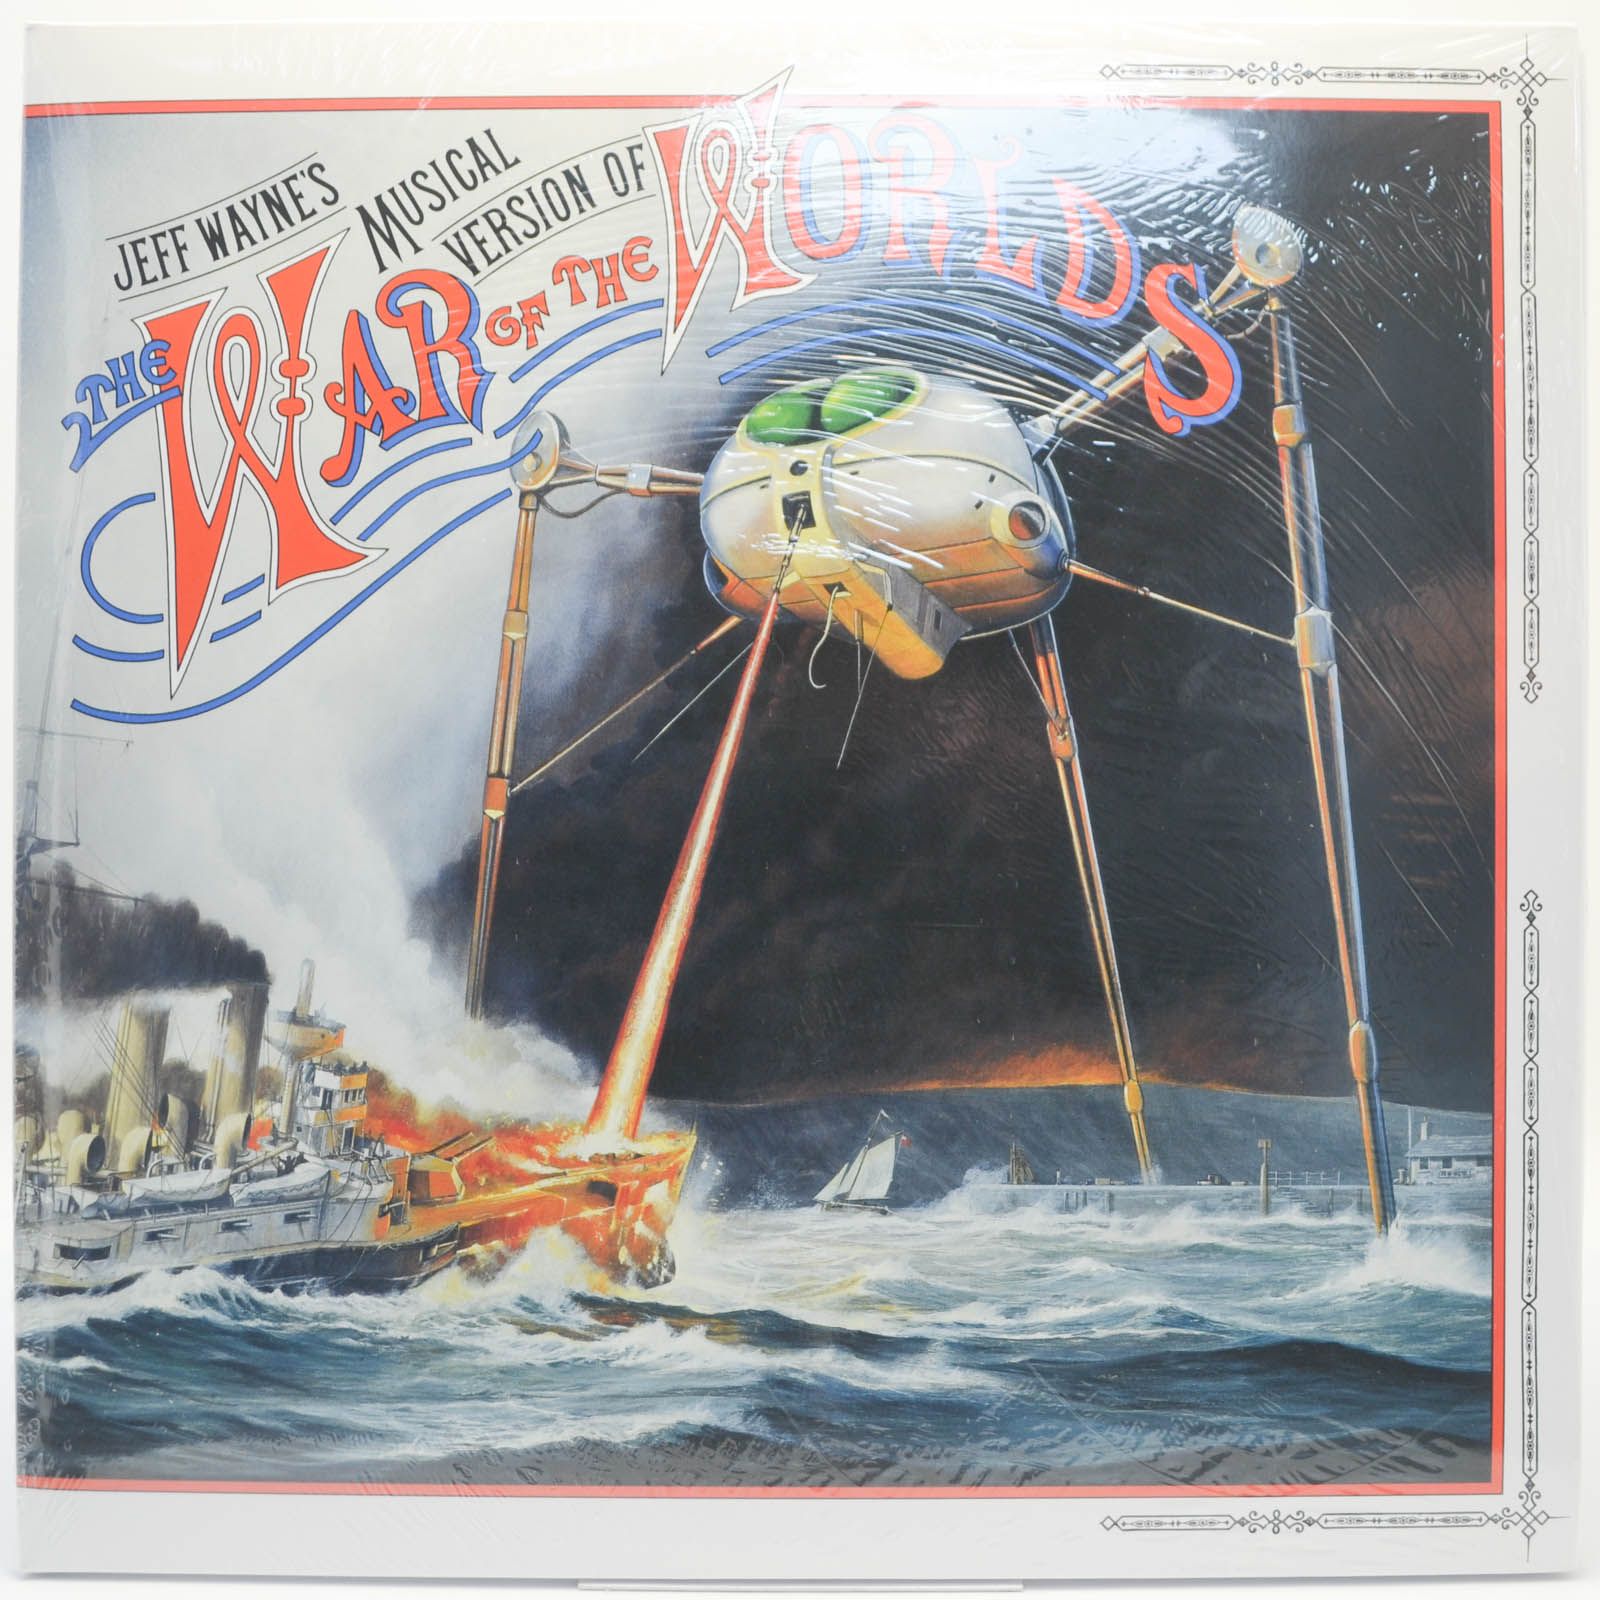 Jeff Wayne — Jeff Wayne's Musical Version Of The War Of The Worlds (2LP), 1978